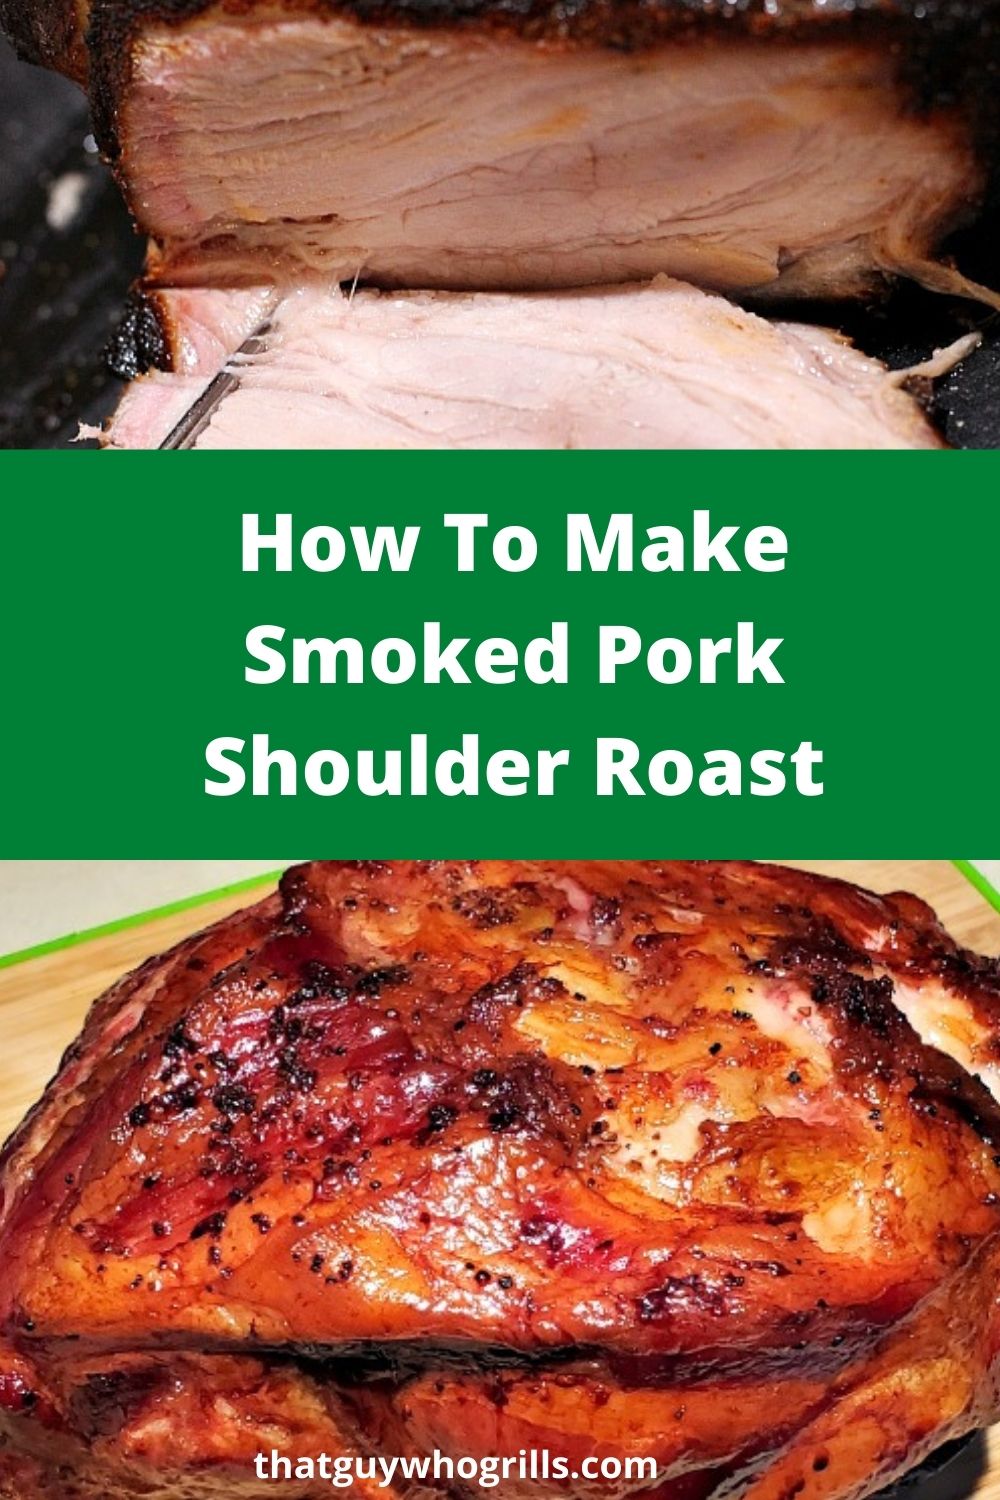 How To Make Smoked Pork Shoulder Roast